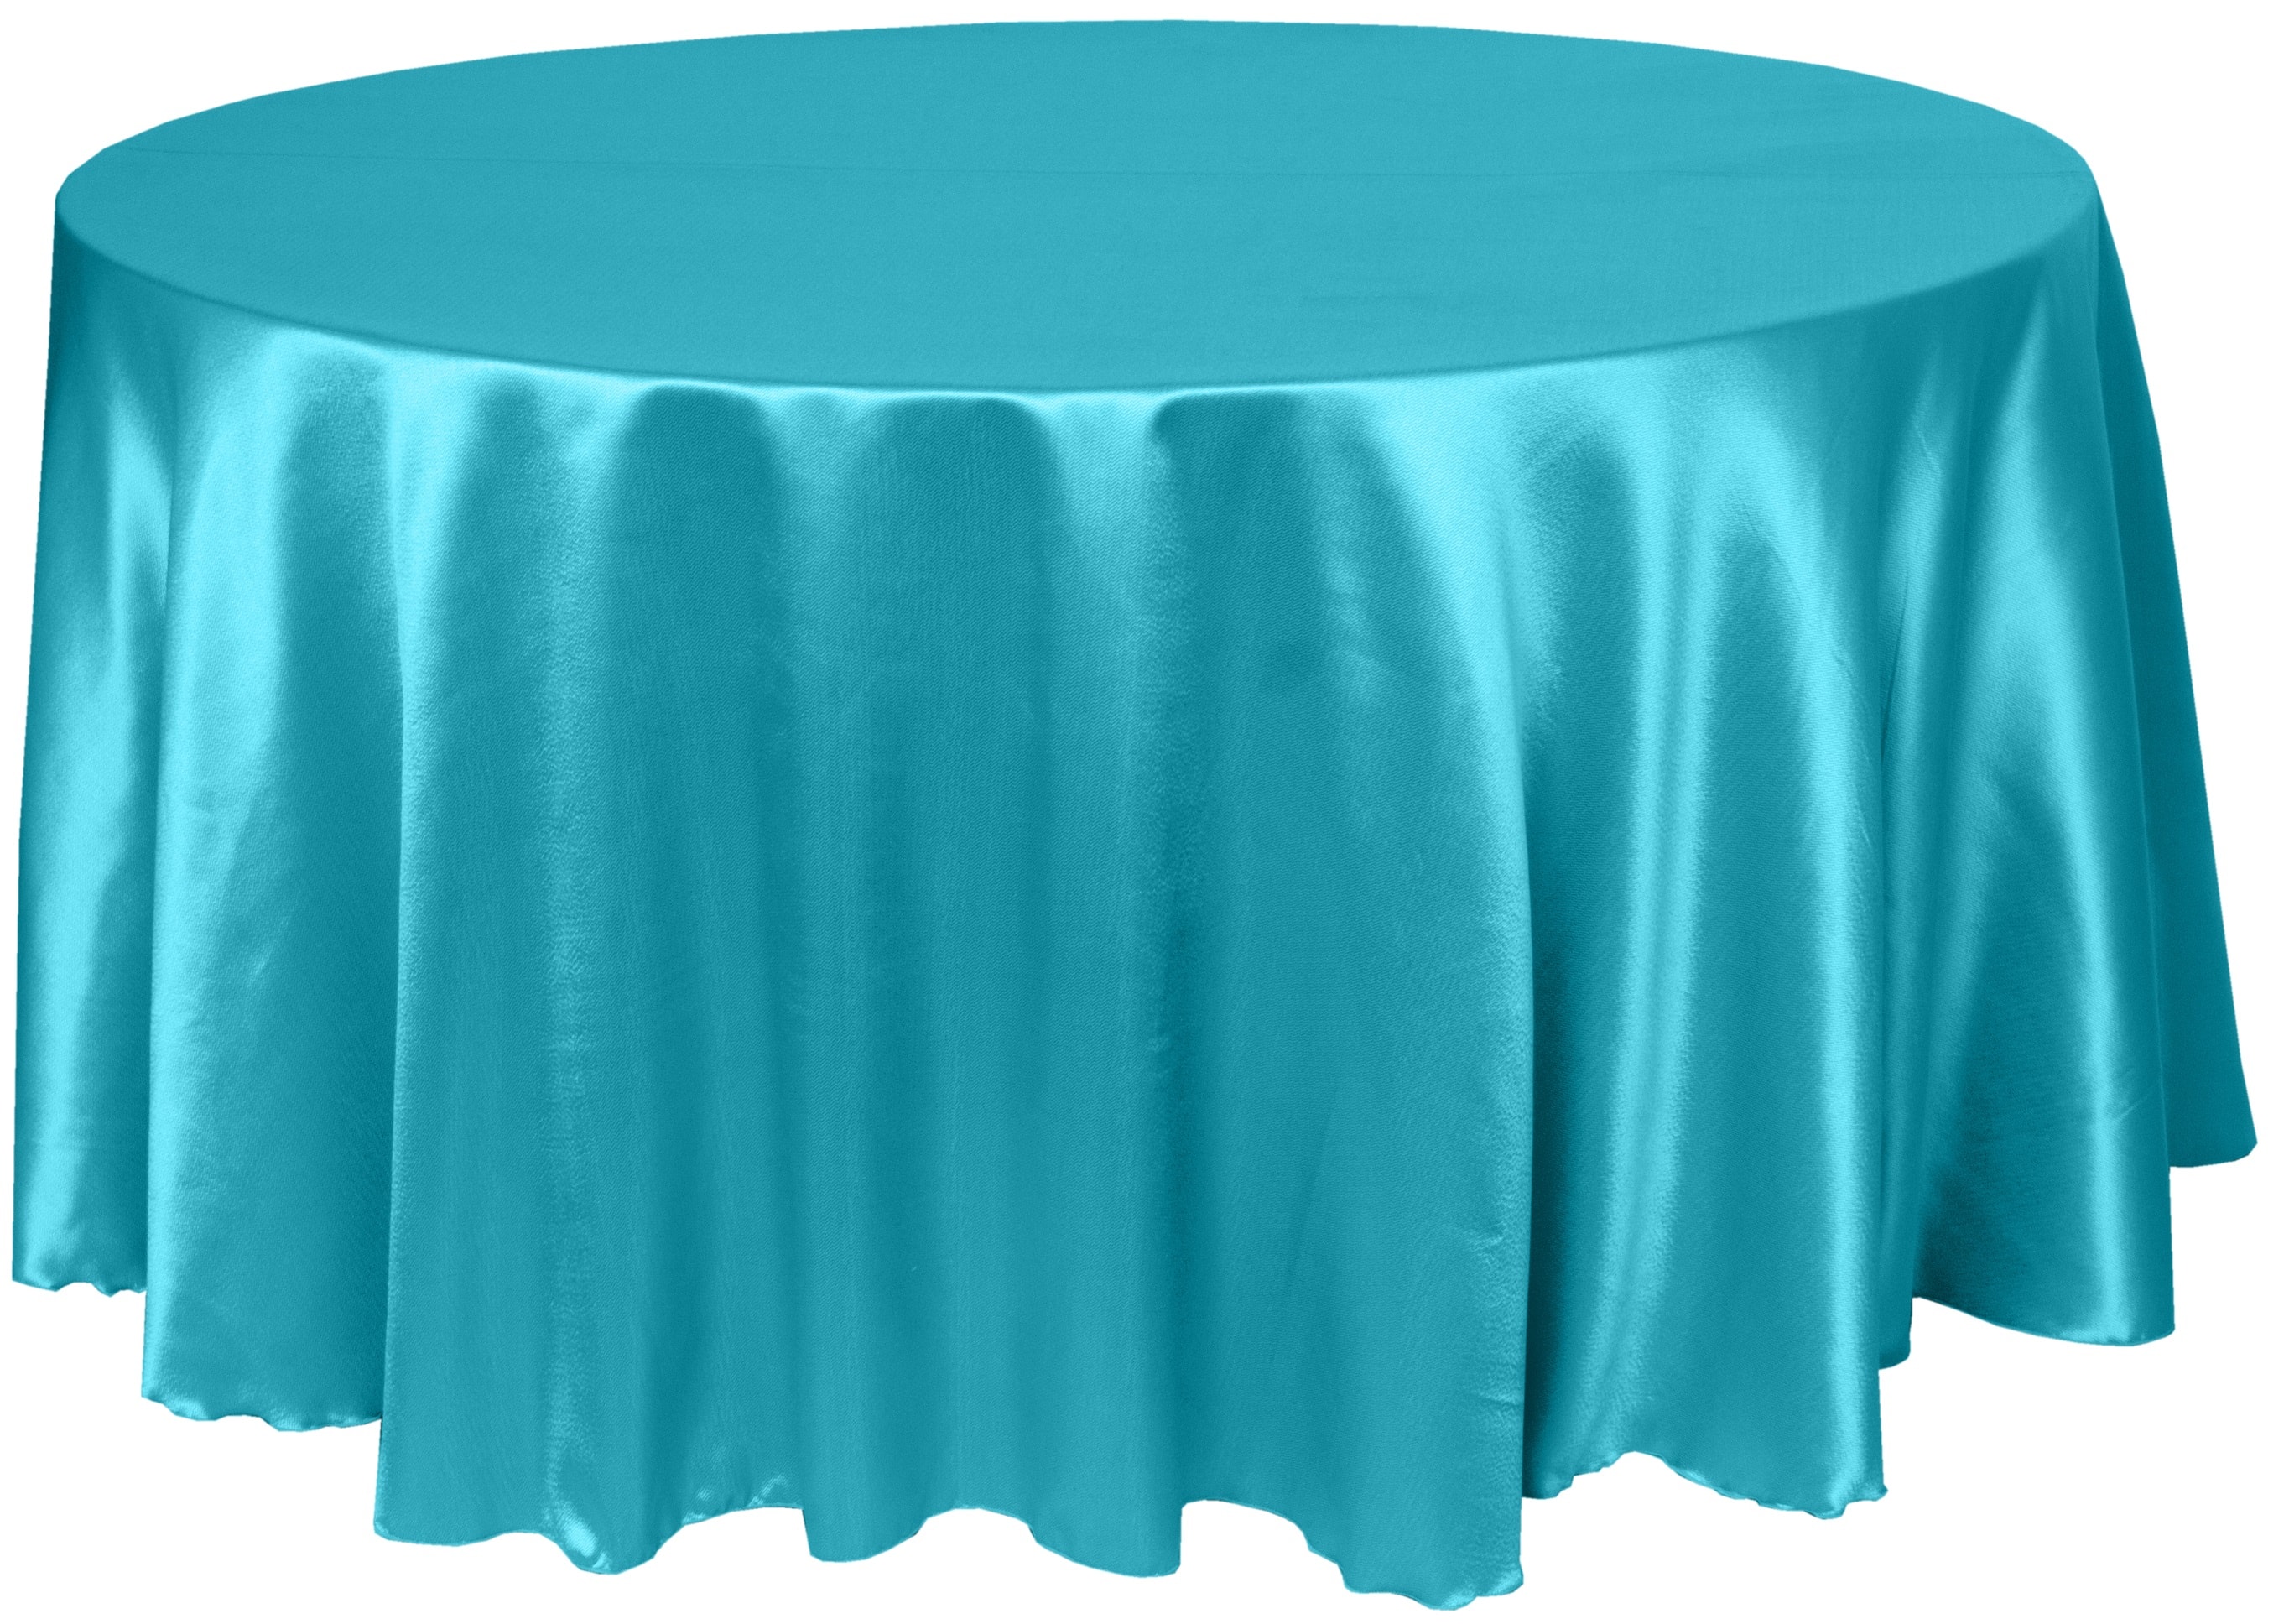 Fandango Herringbone Weave Round Tablecloth